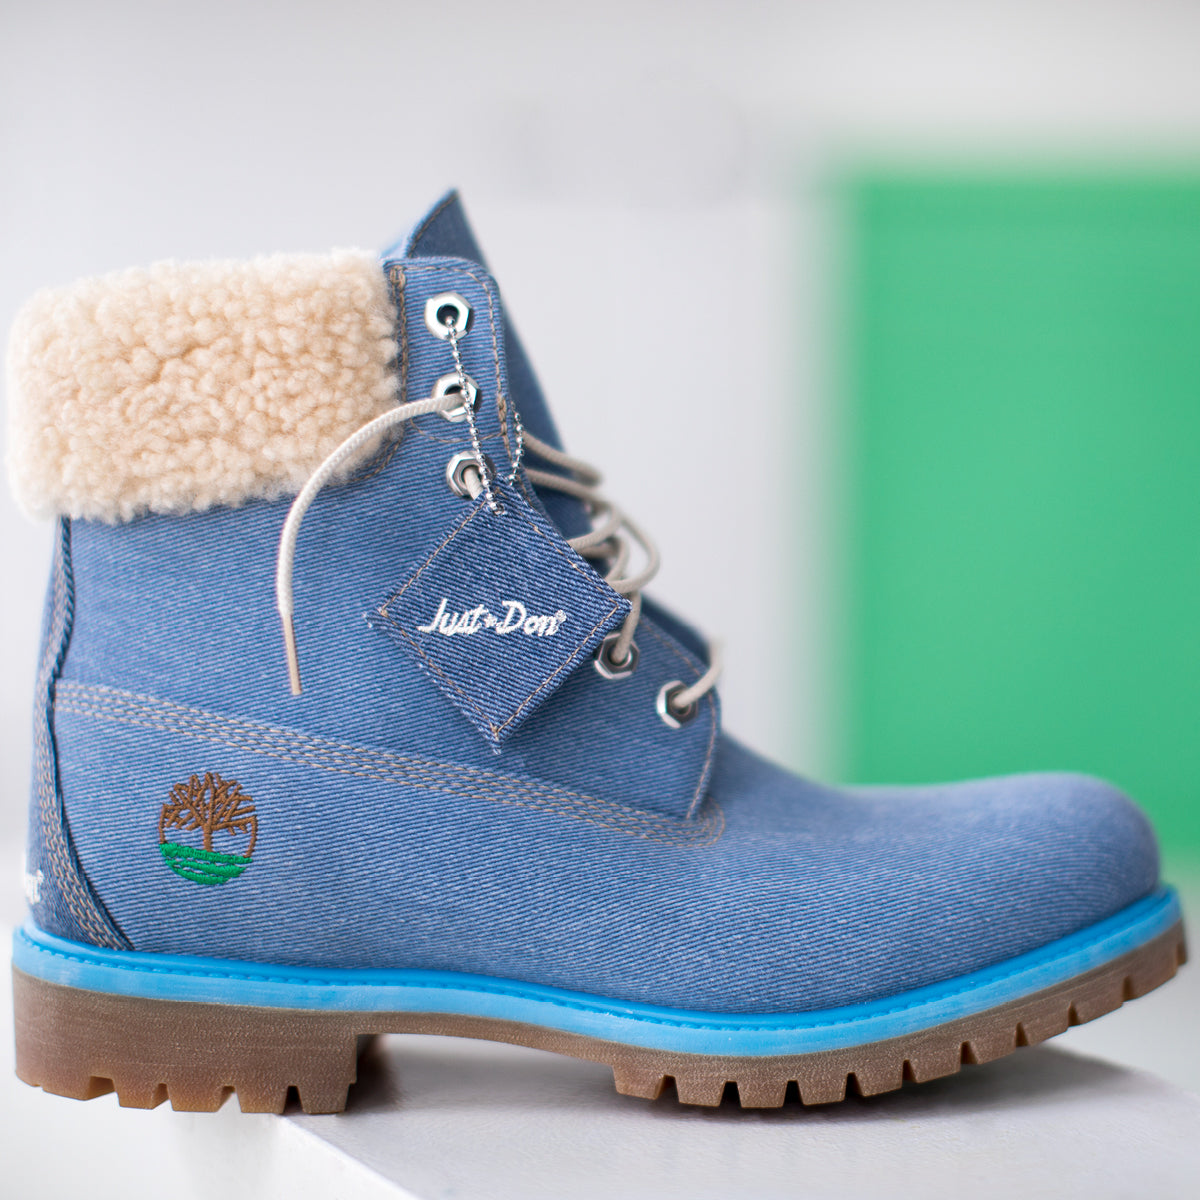 blue timberland hiking boots